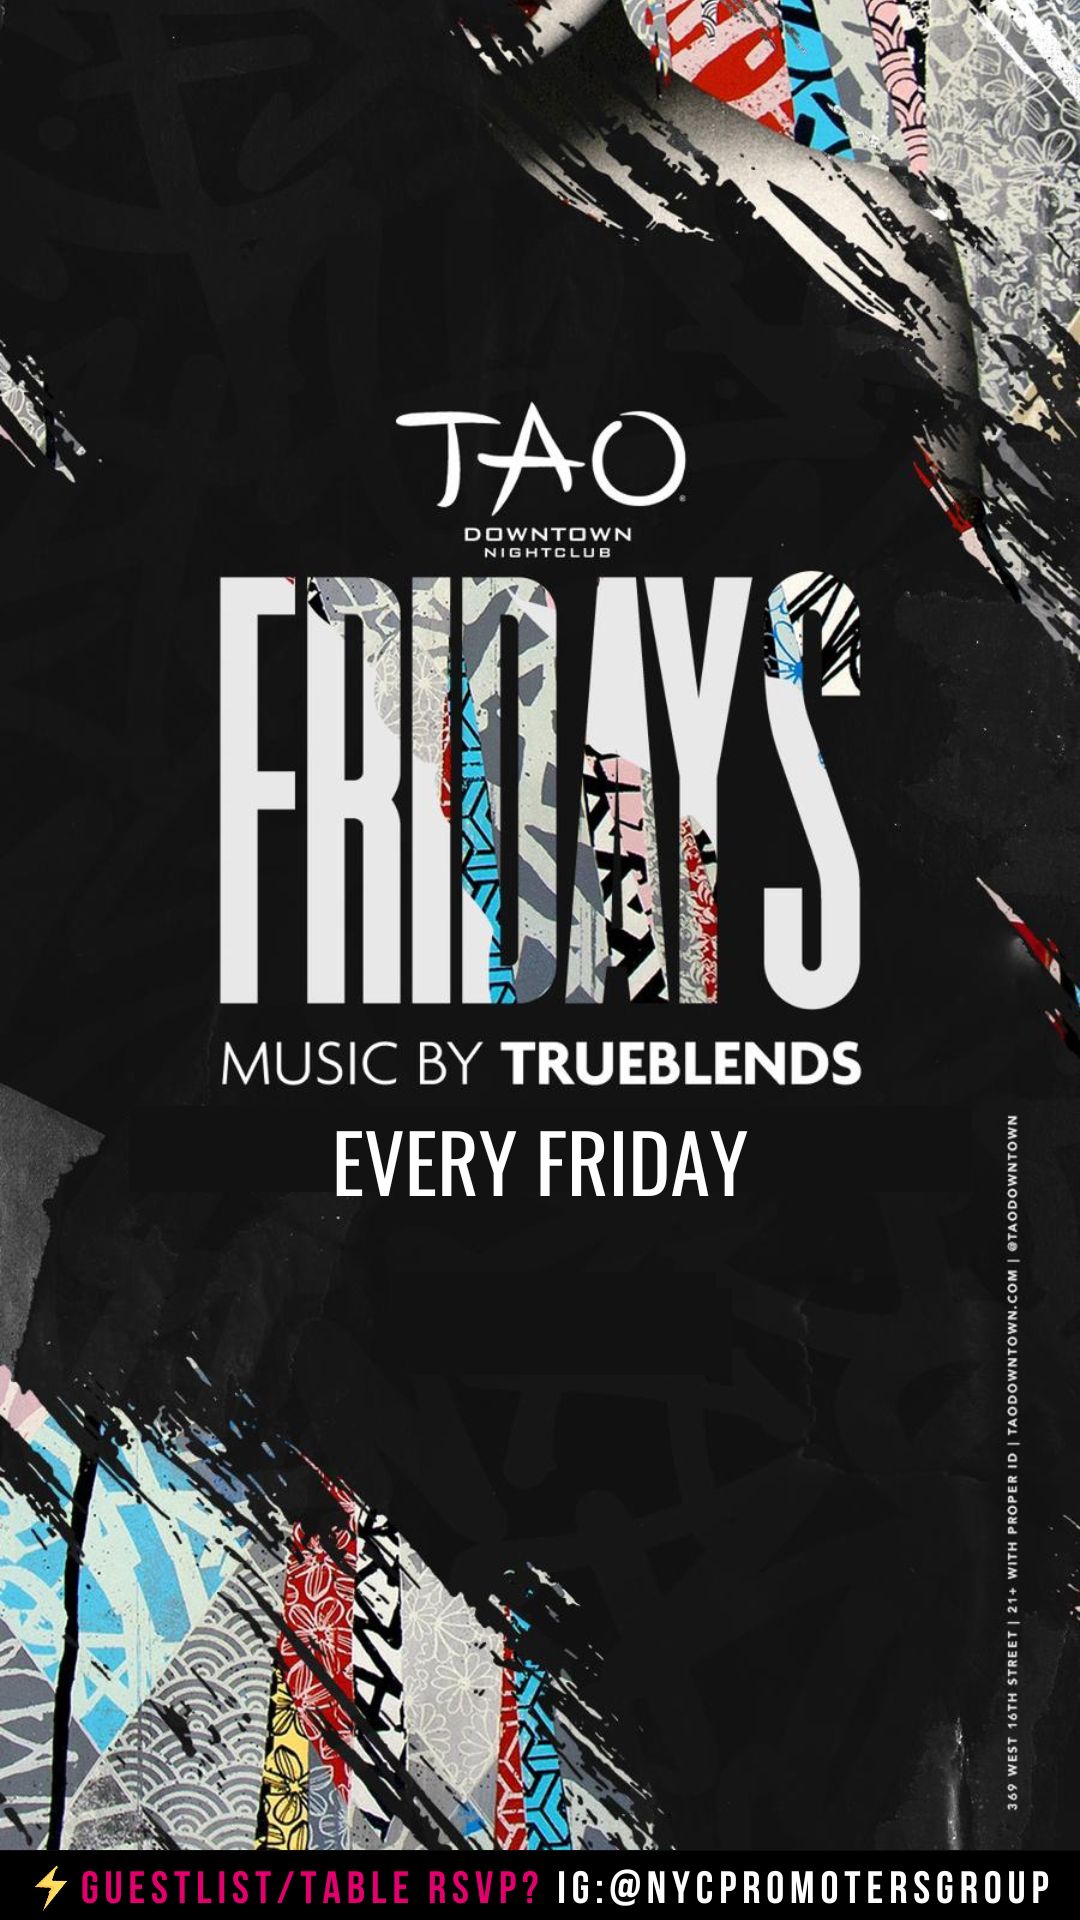 TAO NYC Nightclubs Fridays